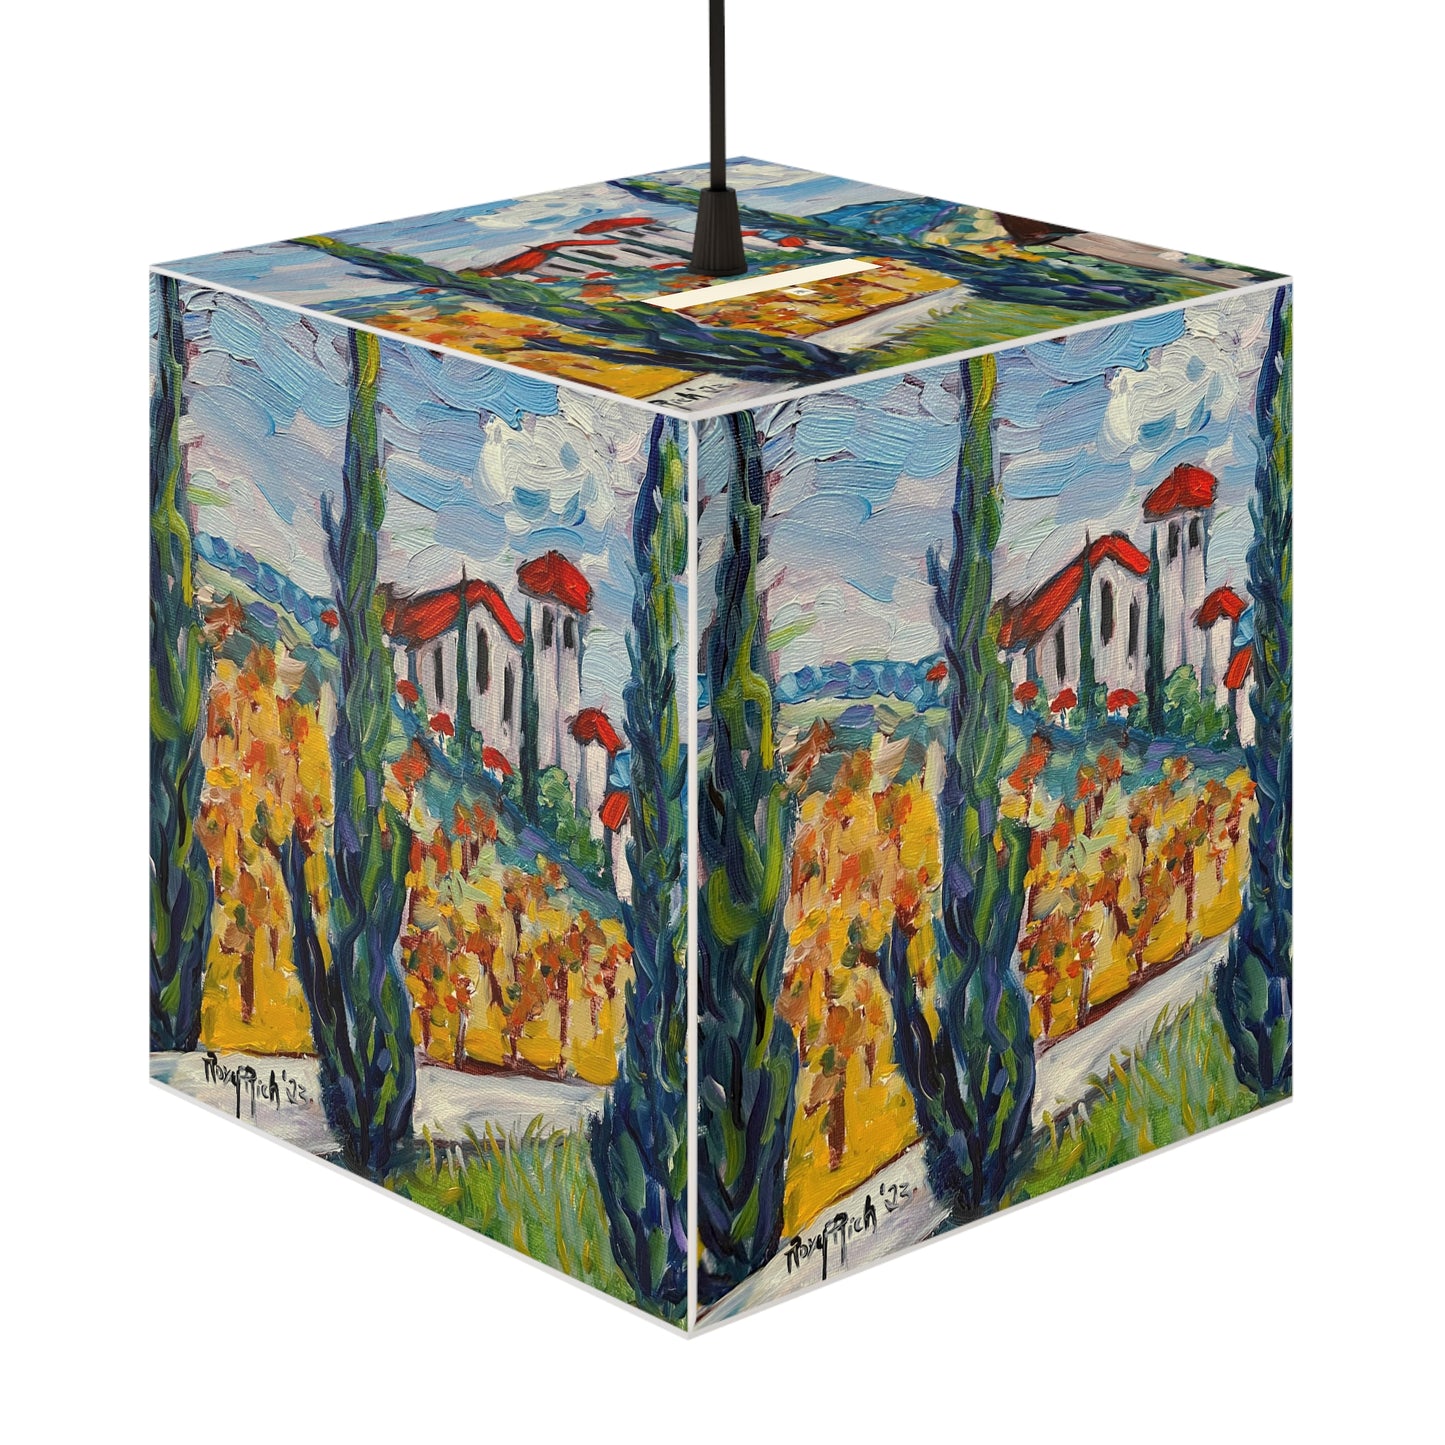 Robert Renzoni Winery Cube Lamp